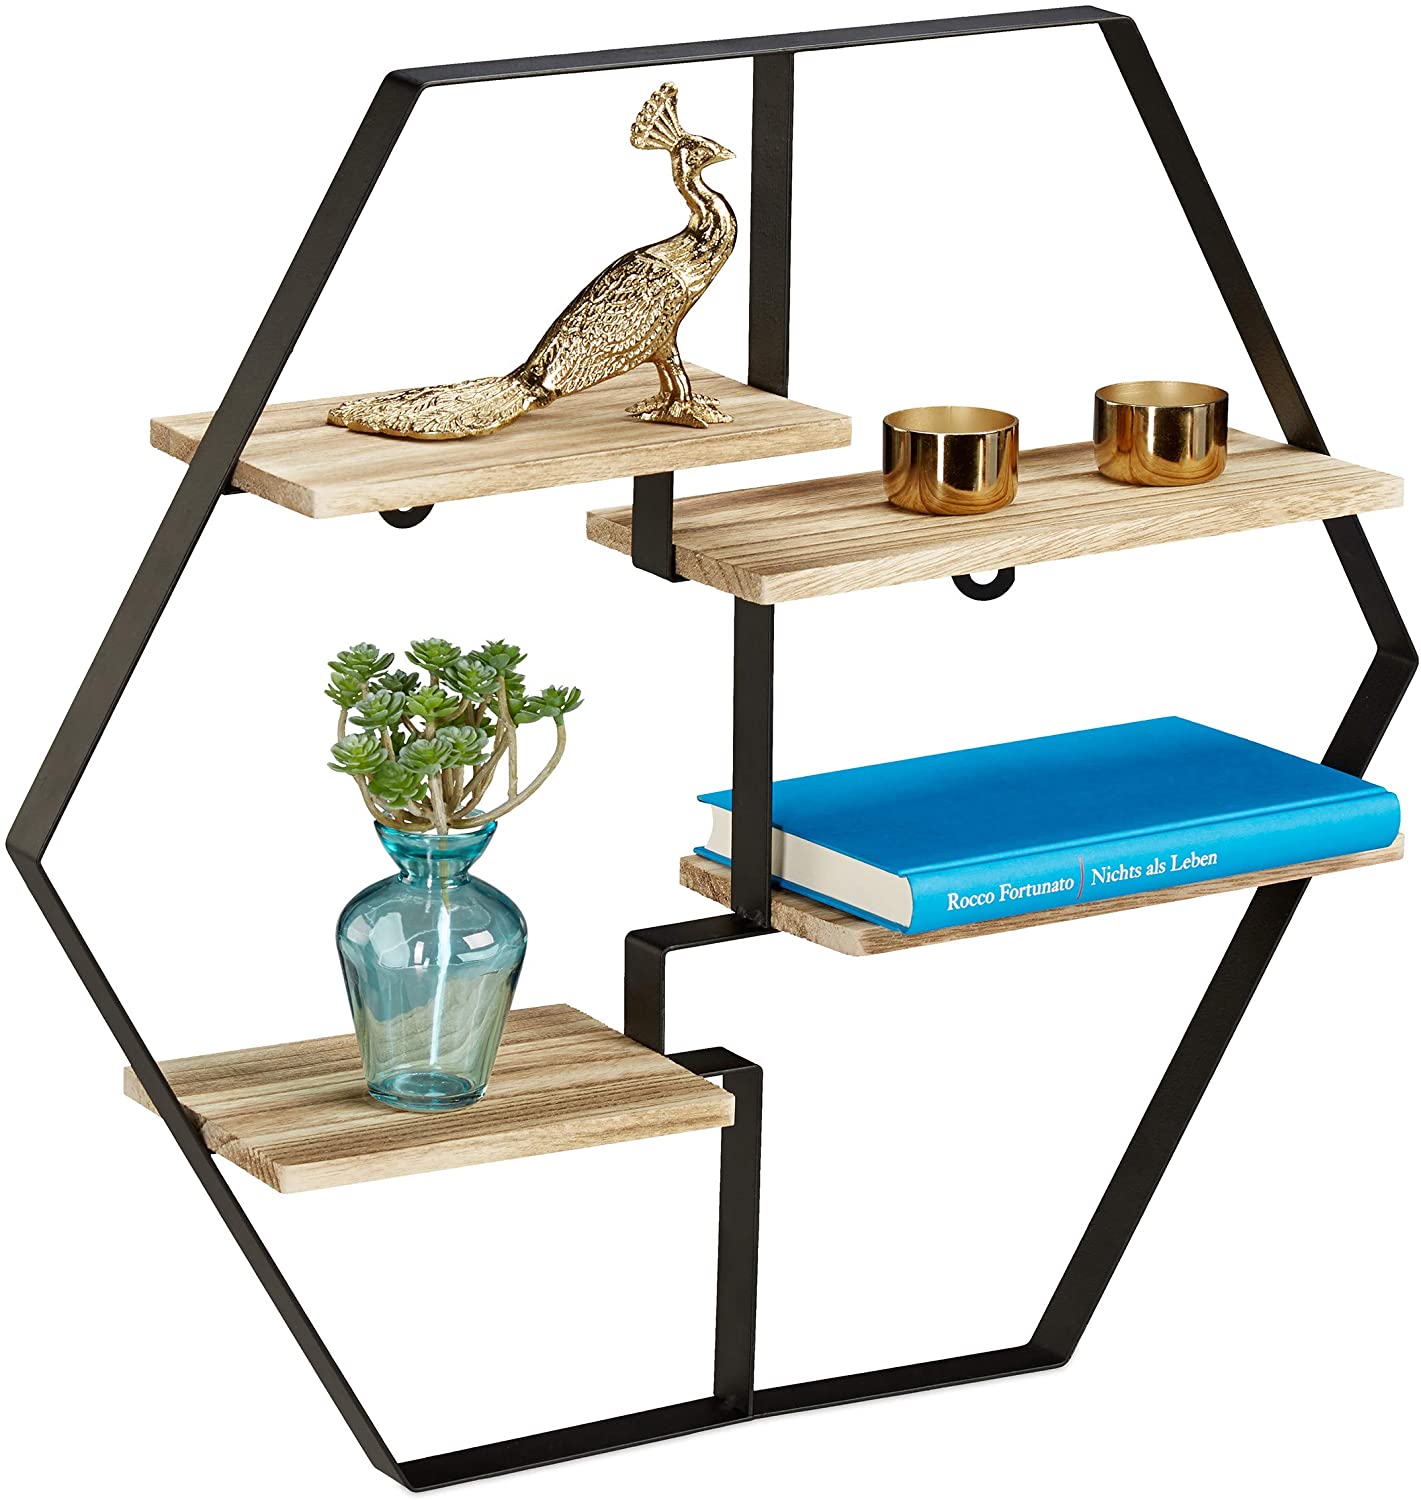 Relaxdays Hexagon Shelf For The Wall, 4 Shelves, Wood & Iron, Hexagonal Wal